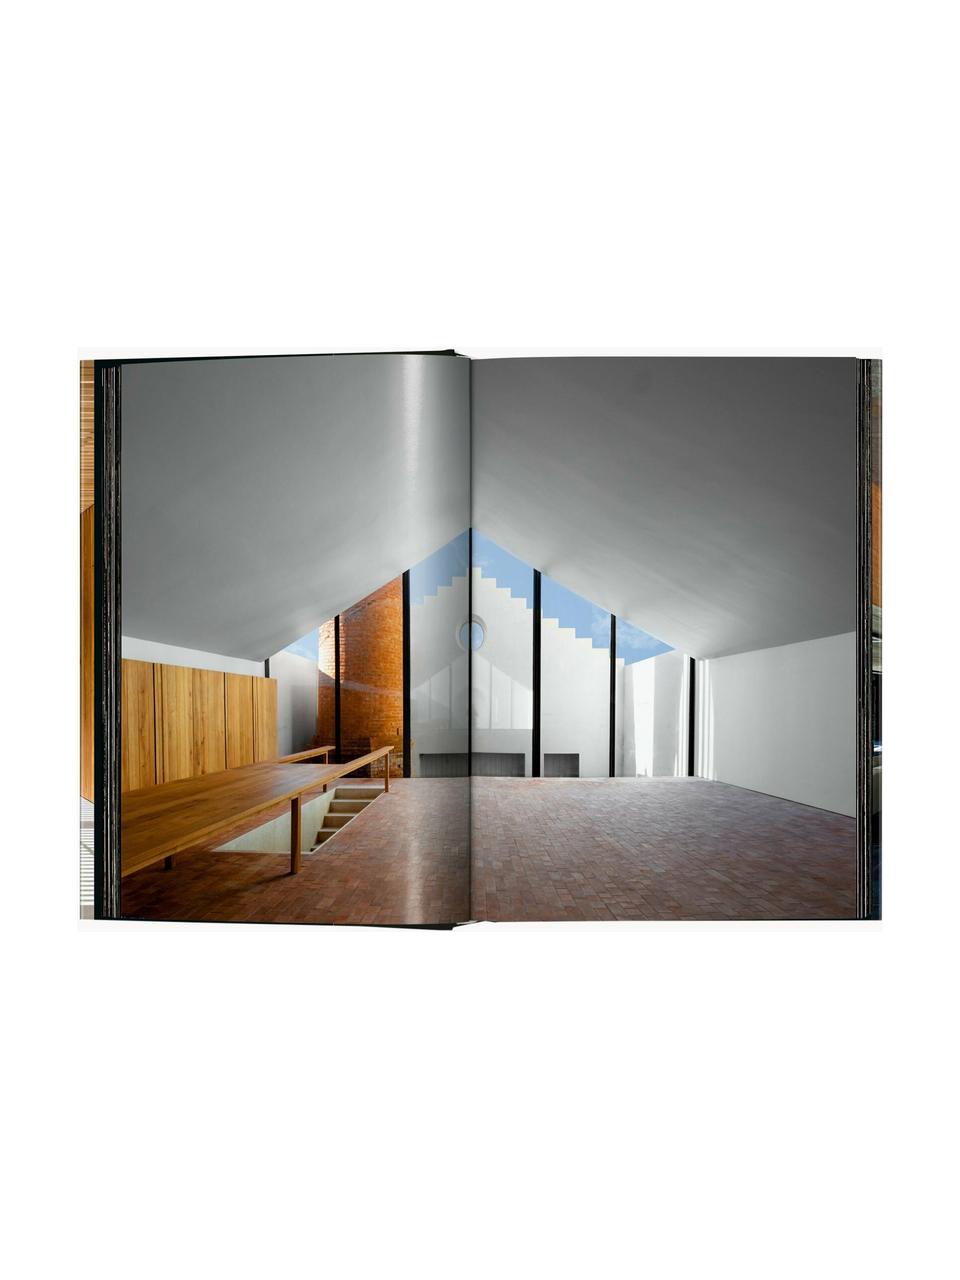 Livre photo Homes for our Time Vol. 2, Papier, couverture rigide, Homes for our Time Vol. 2, larg. 25 x haut. 37 cm